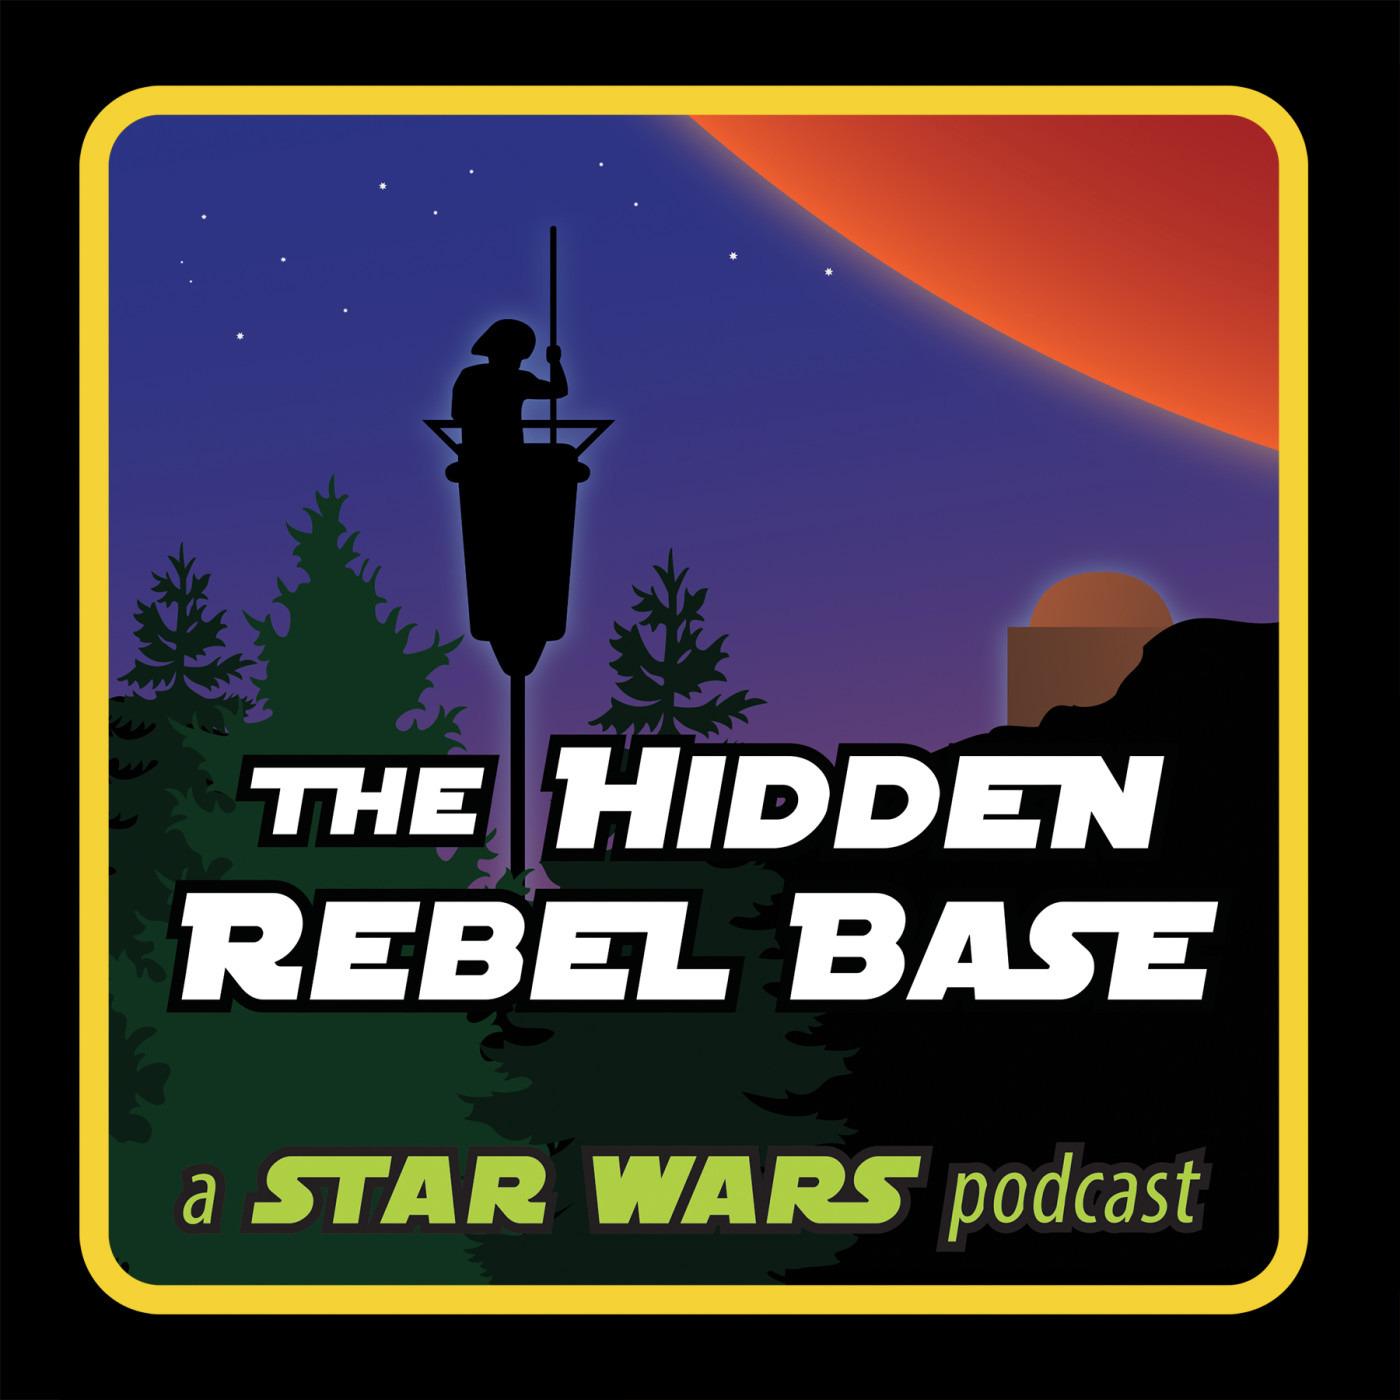 The Hidden Rebel Base: STAR WARS podcast